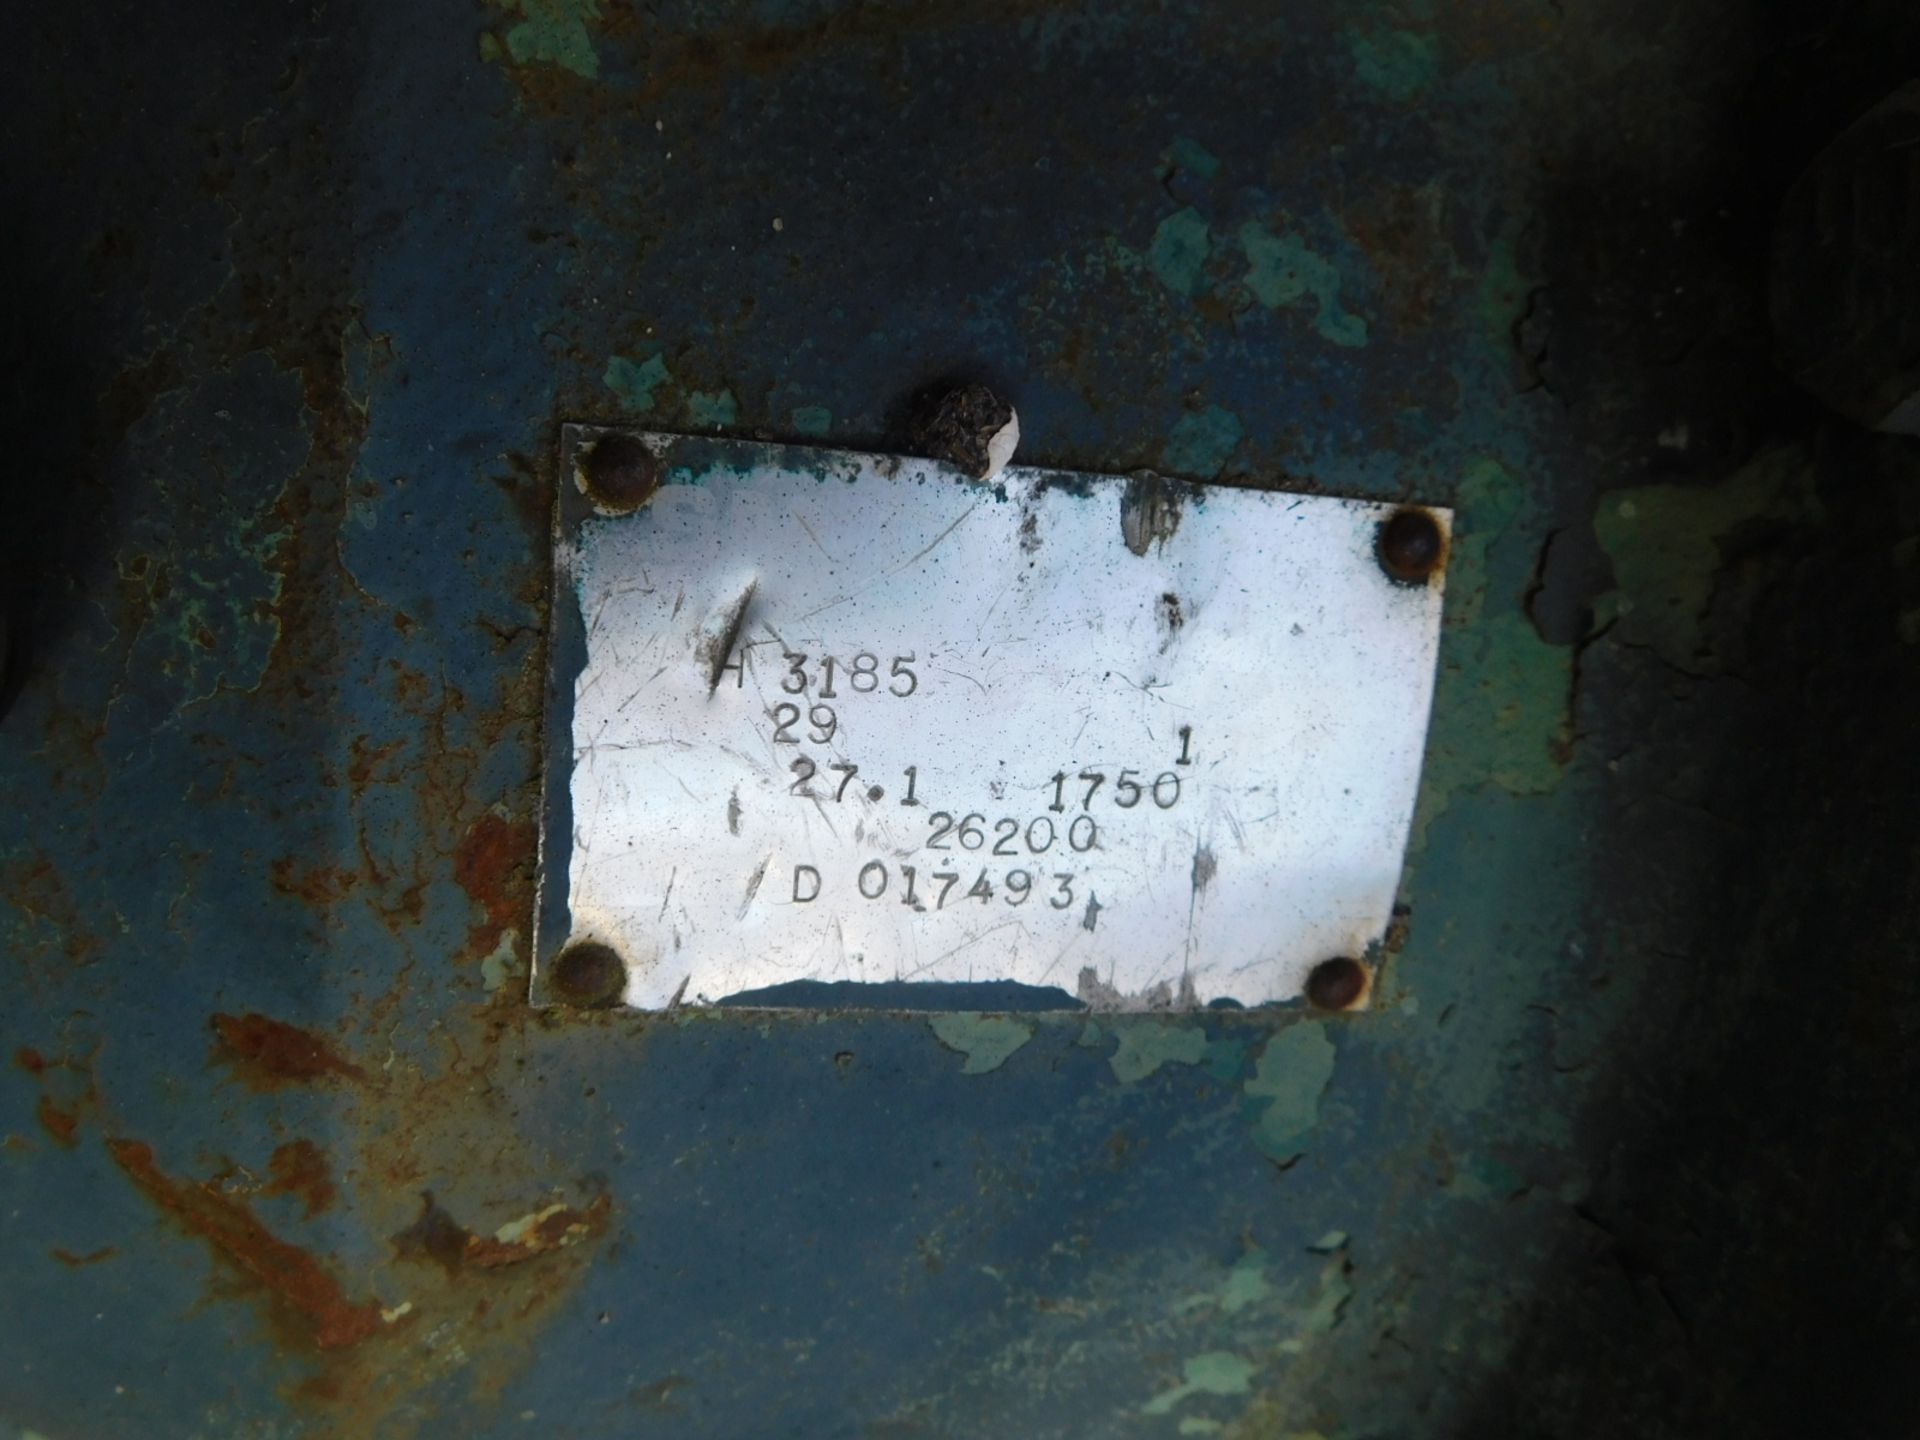 SM CYCLO H3185, 27.1 RATIO, 1750 RPM - Image 2 of 2